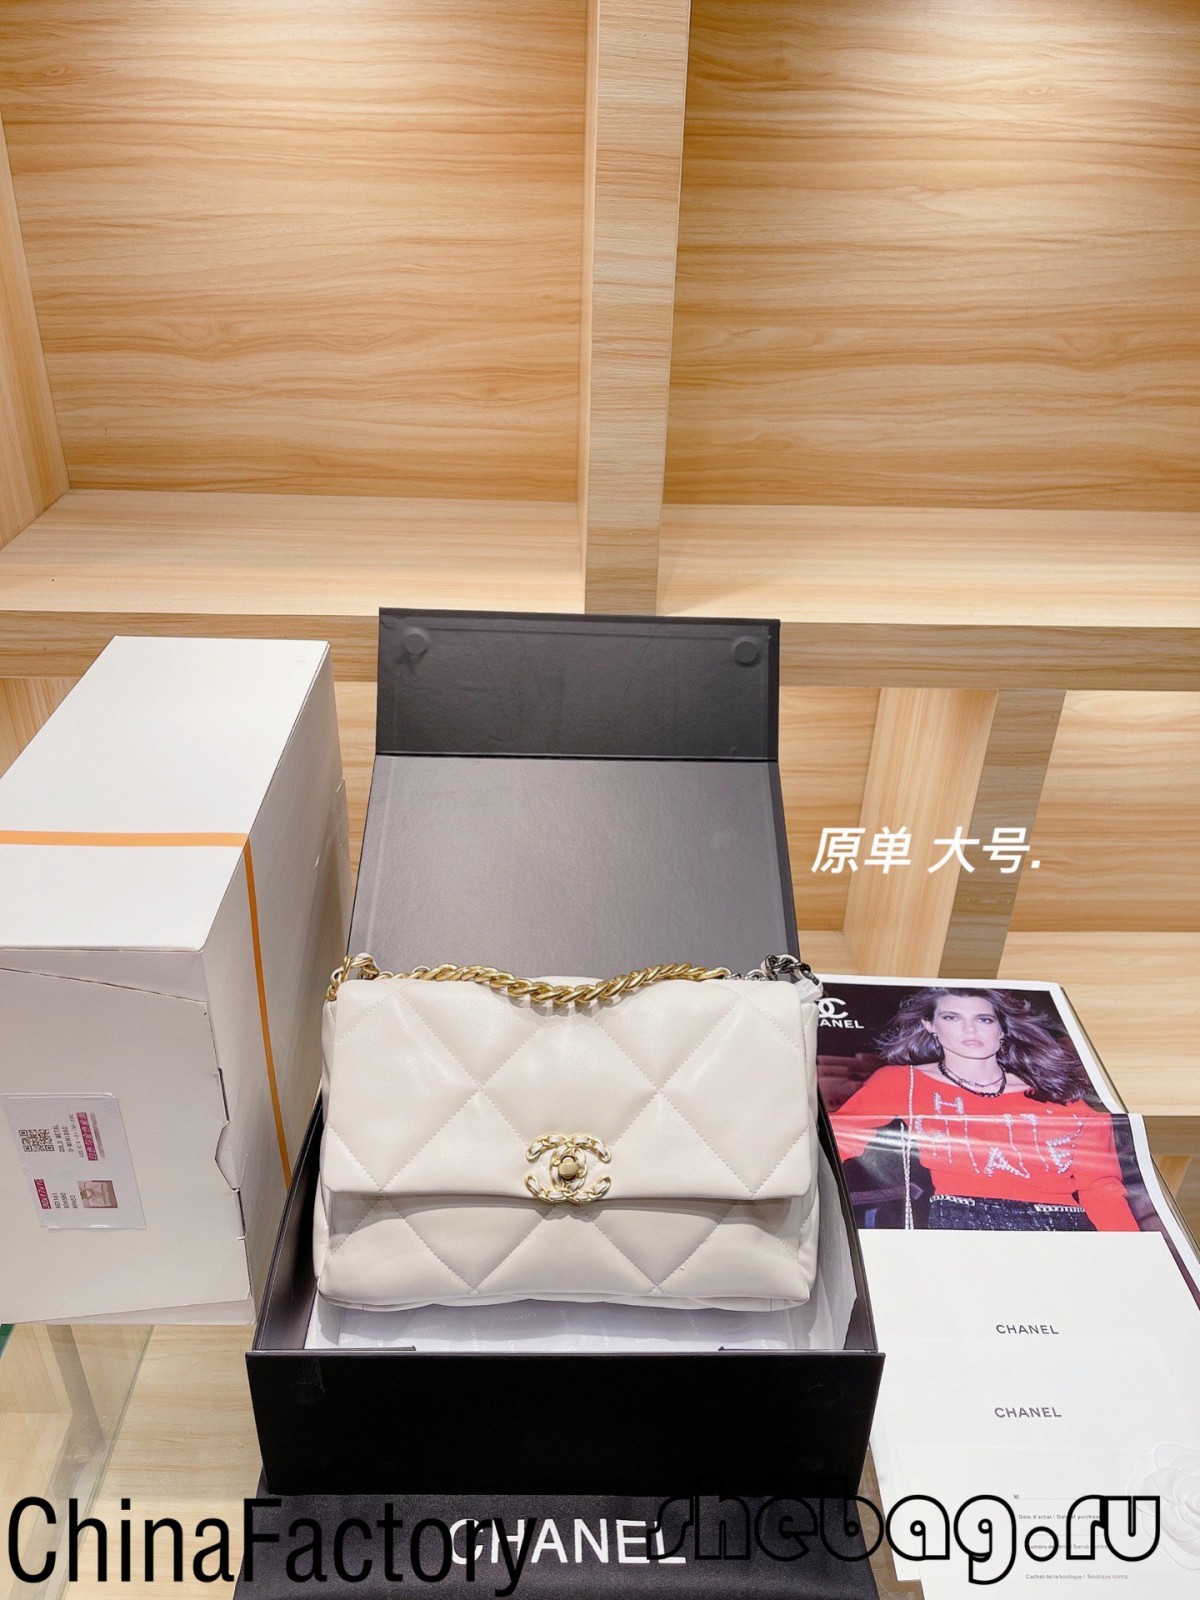 Replika Tas Chanel Aaa: Review Tas Replika Chanel 19 (Update tahun 2022) - Toko Online Tas Louis Vuitton Palsu Kualitas Terbaik